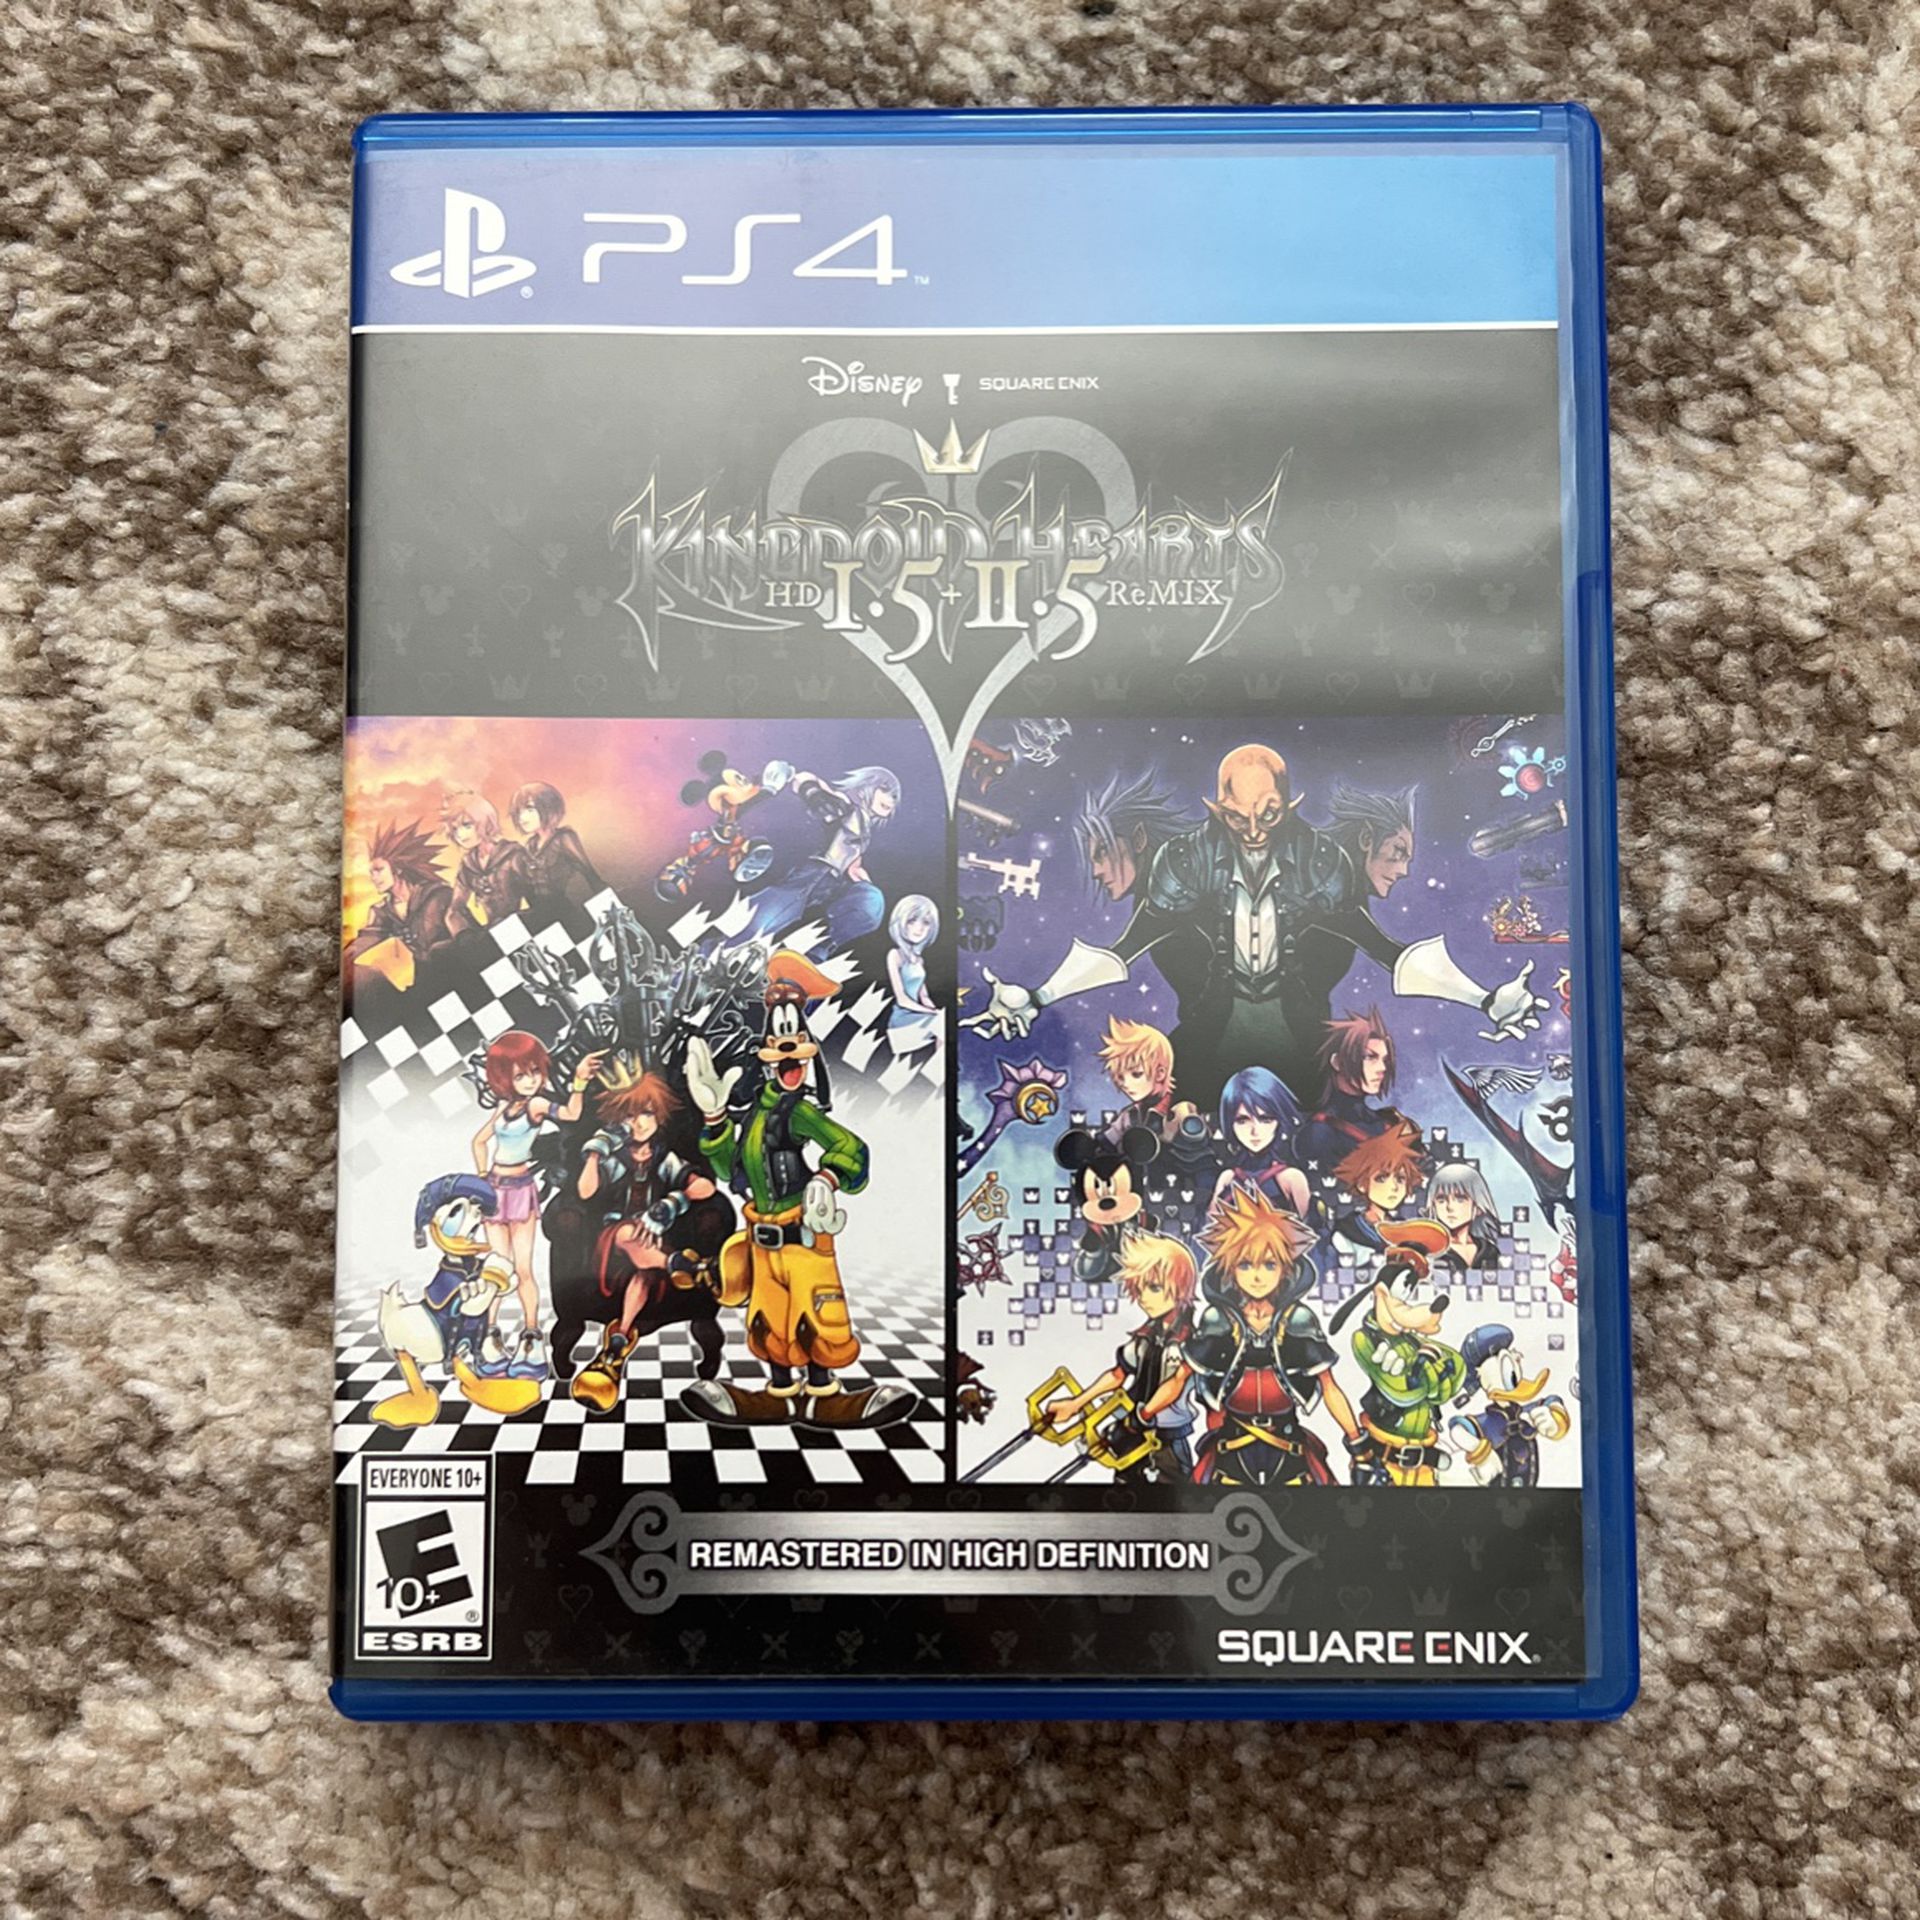 Playstation 4 Ps4 Kingdom Hearts Hd 1.5/2.5